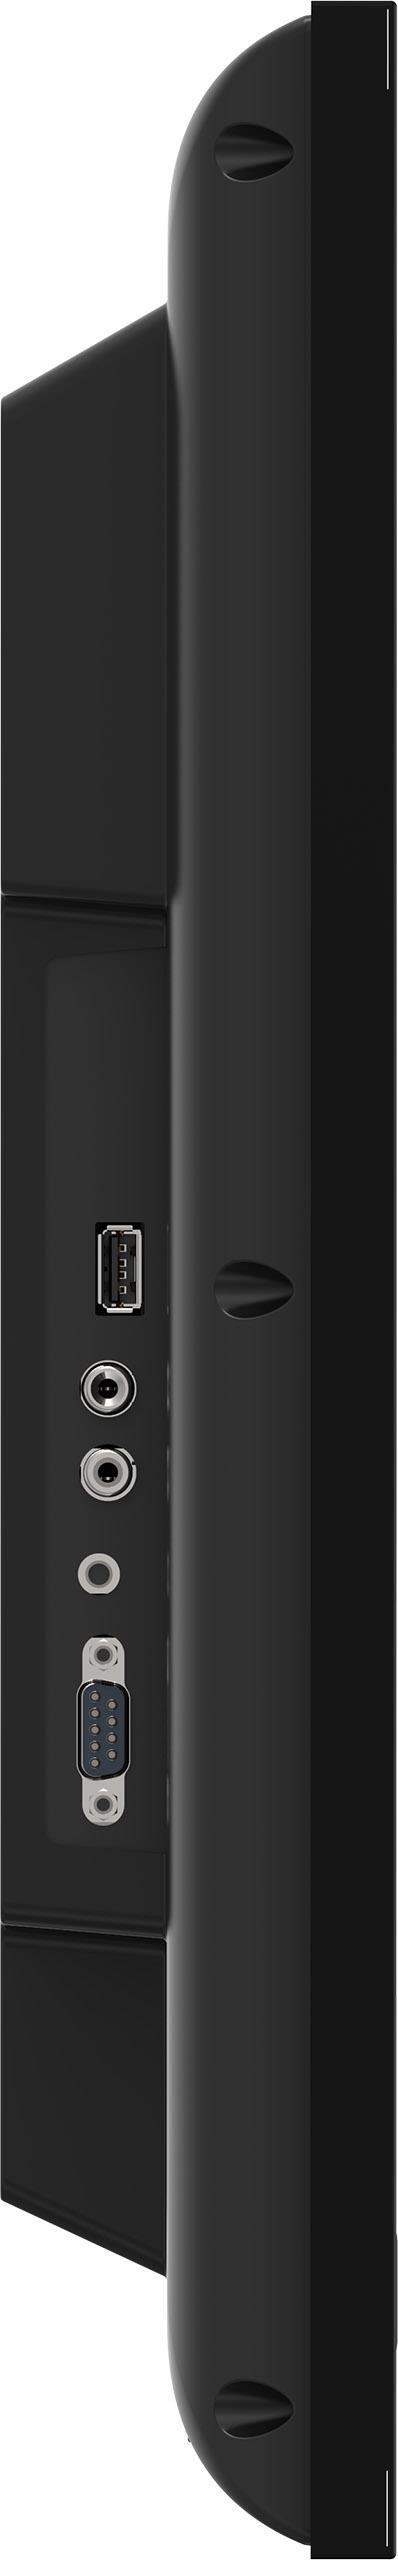 Iiyama ProLite LH3254HS-B1AG LED-Display, 80cm (31.5"), schwarz TFT Monitor, 16:9, 80cm (31.5"), Auflösung: 1920x1080 Pixel, VESA Mount, 8ms, Helligkeit: 500cd, Blickwinkel: 178/178°(H/V), Kontrast: 1200:1, USB (2x), WLAN, Audio, DVI, VGA, Display-Port, HDMI, Micro SD-Slot, inkl.: Kabel (HDMI), Netzteil, Netzkabel (EU, UK), Farbe: schwarz [Energieklasse G] (LH3254HS-B1AG)